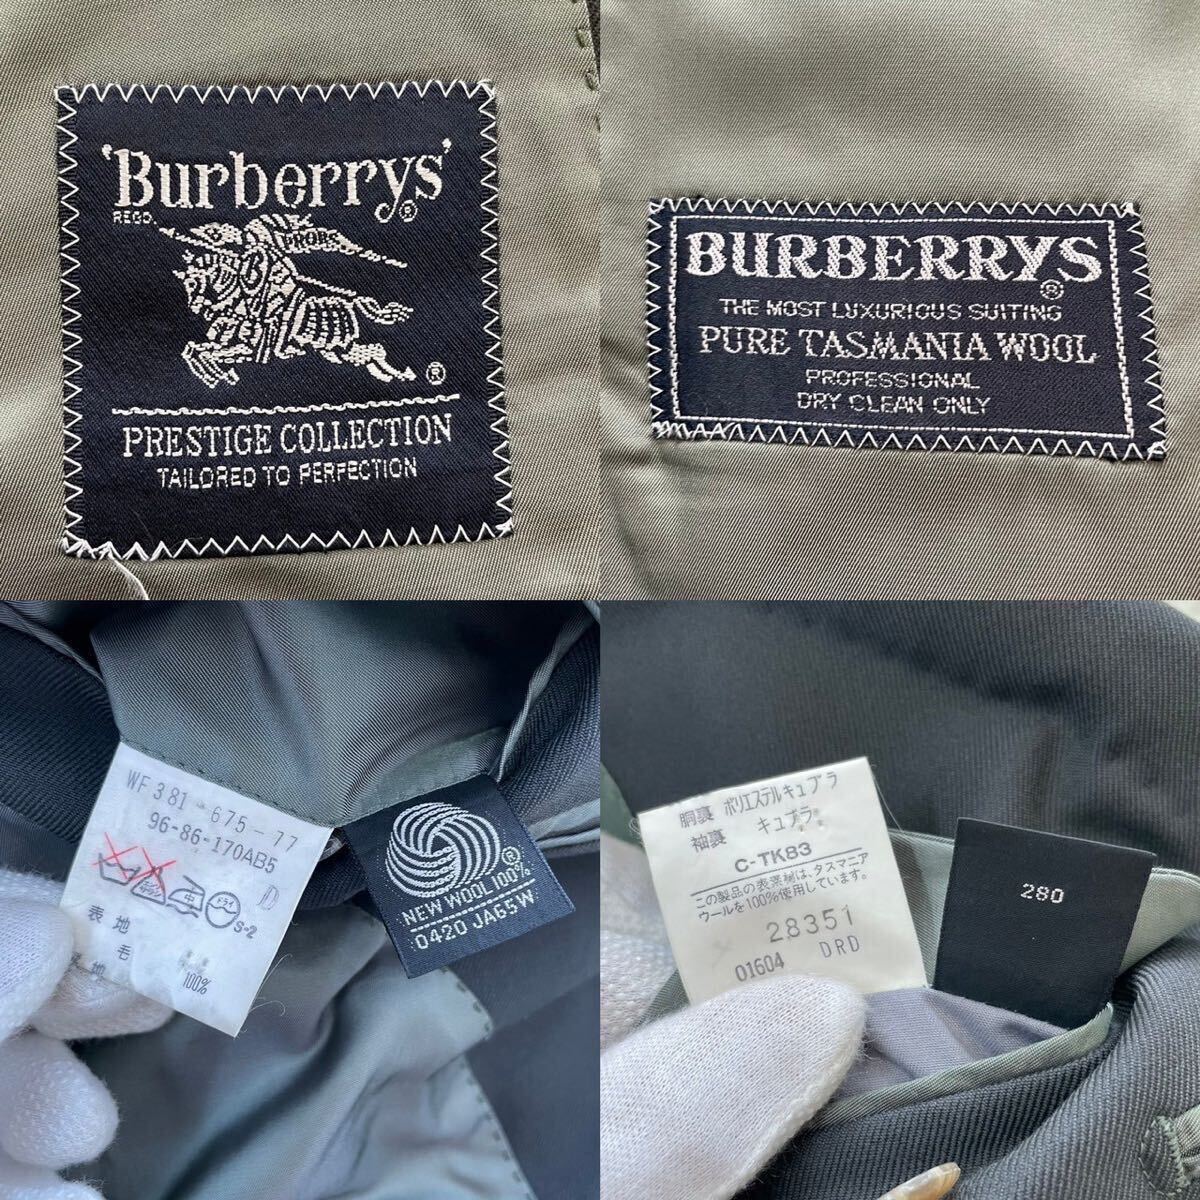  top class line /M corresponding *BURBERRYS Burberry suit setup 3 piece tas mania wool business PRESTIGE COLLECTION deep green gray series 